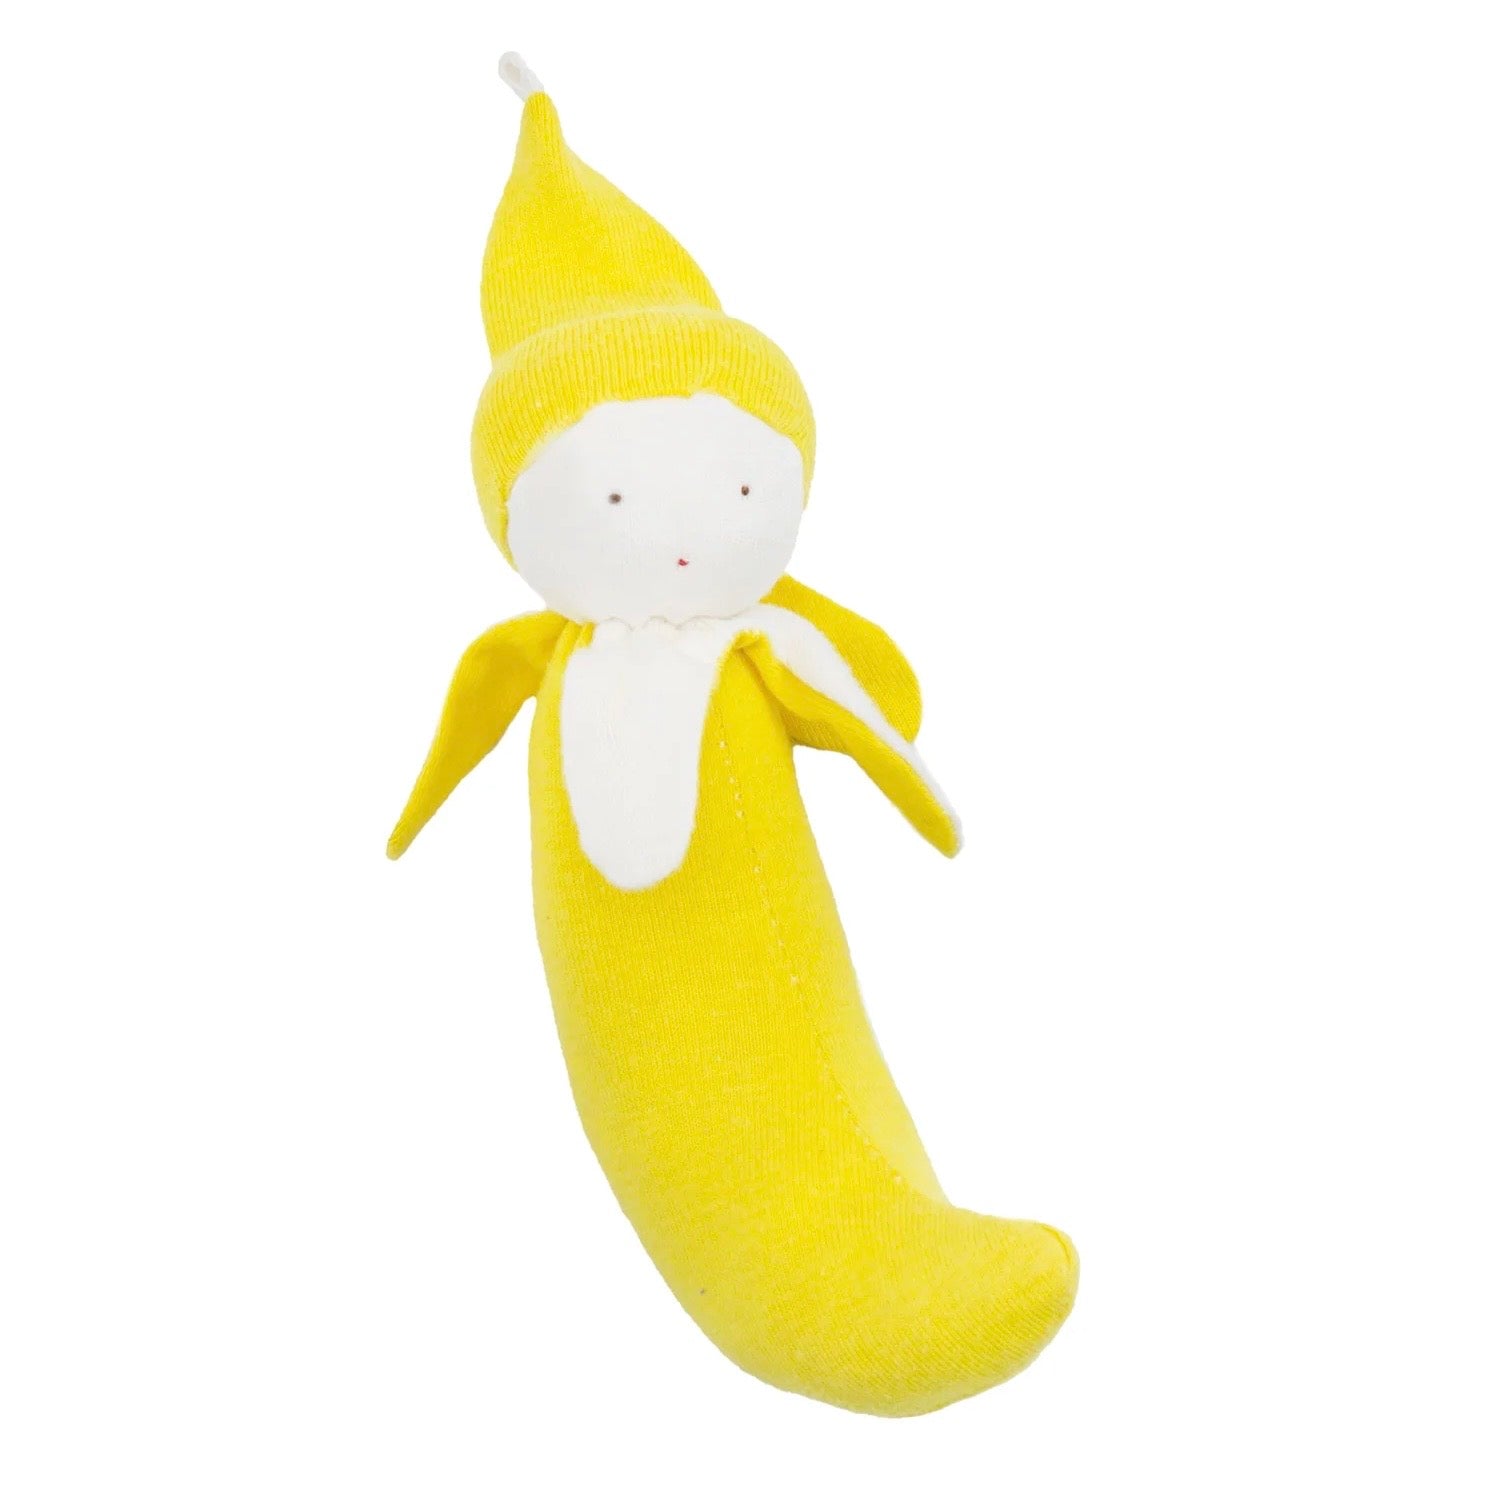 under the nile fair trade organic banana toy